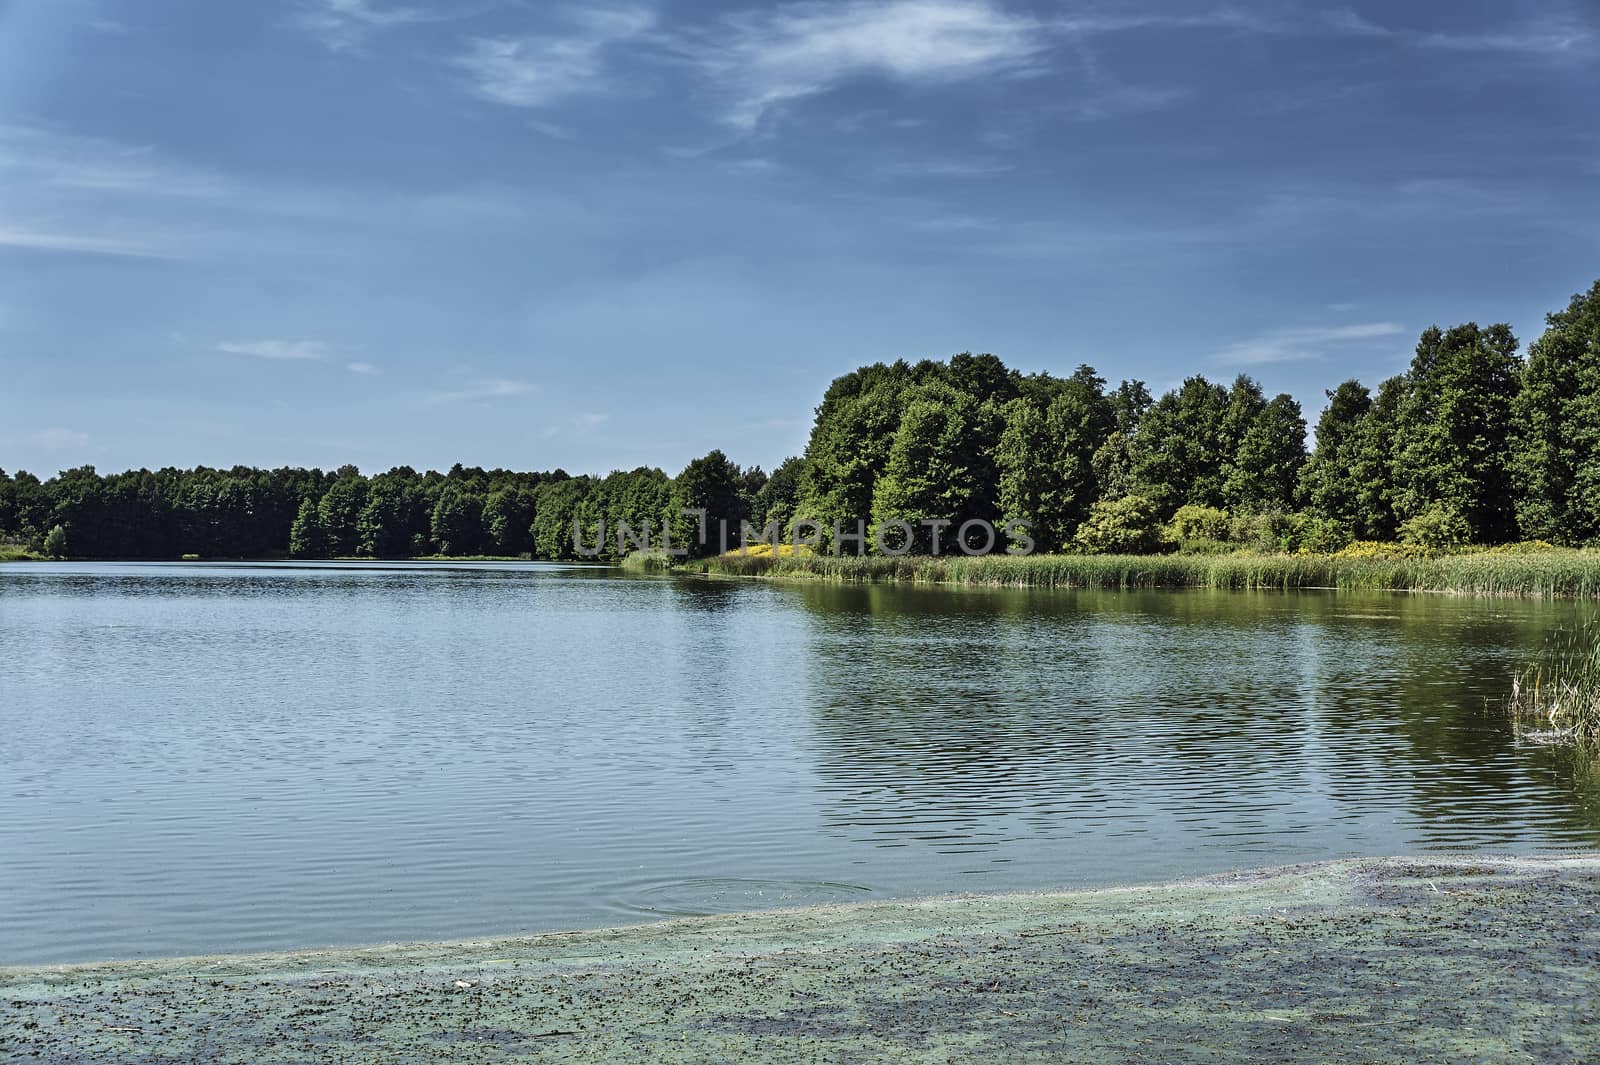 Lagoon "Blewazka" in Kobyla Gora, Poland